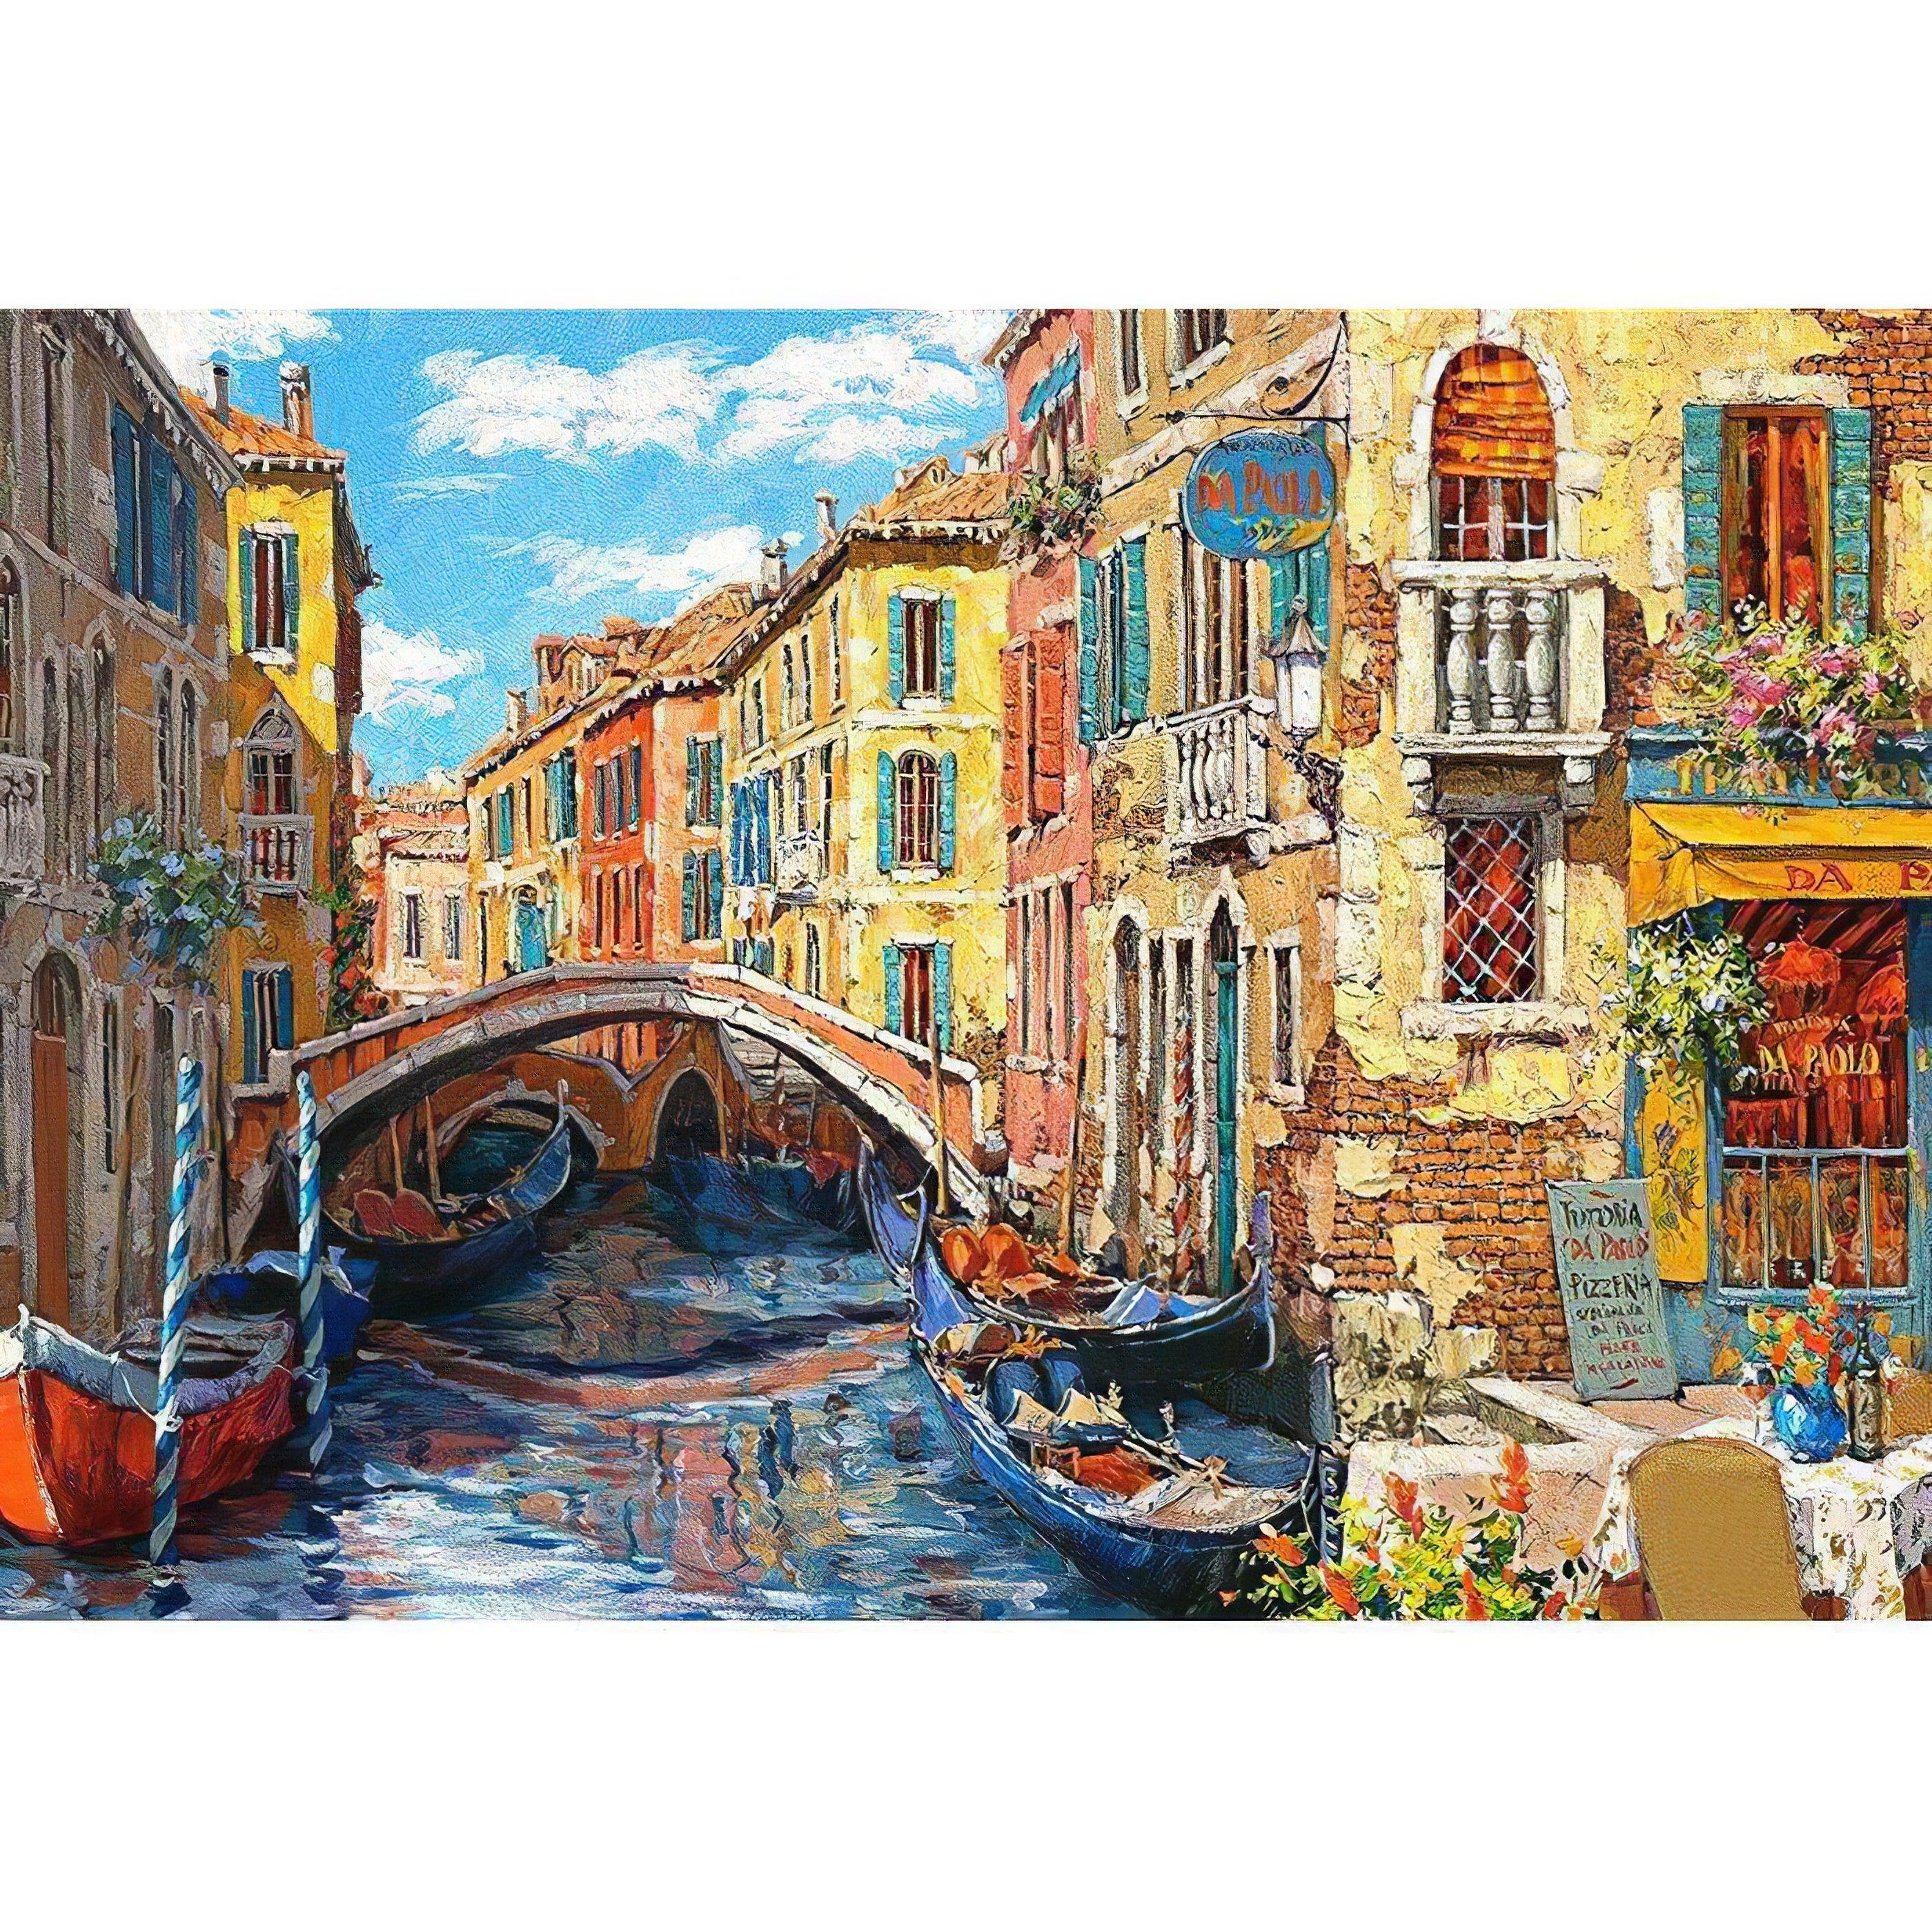 The timeless beauty of Venice, where ancient bridges arch over serene rivers. Bridge And River Of Venice - Diamondartlove